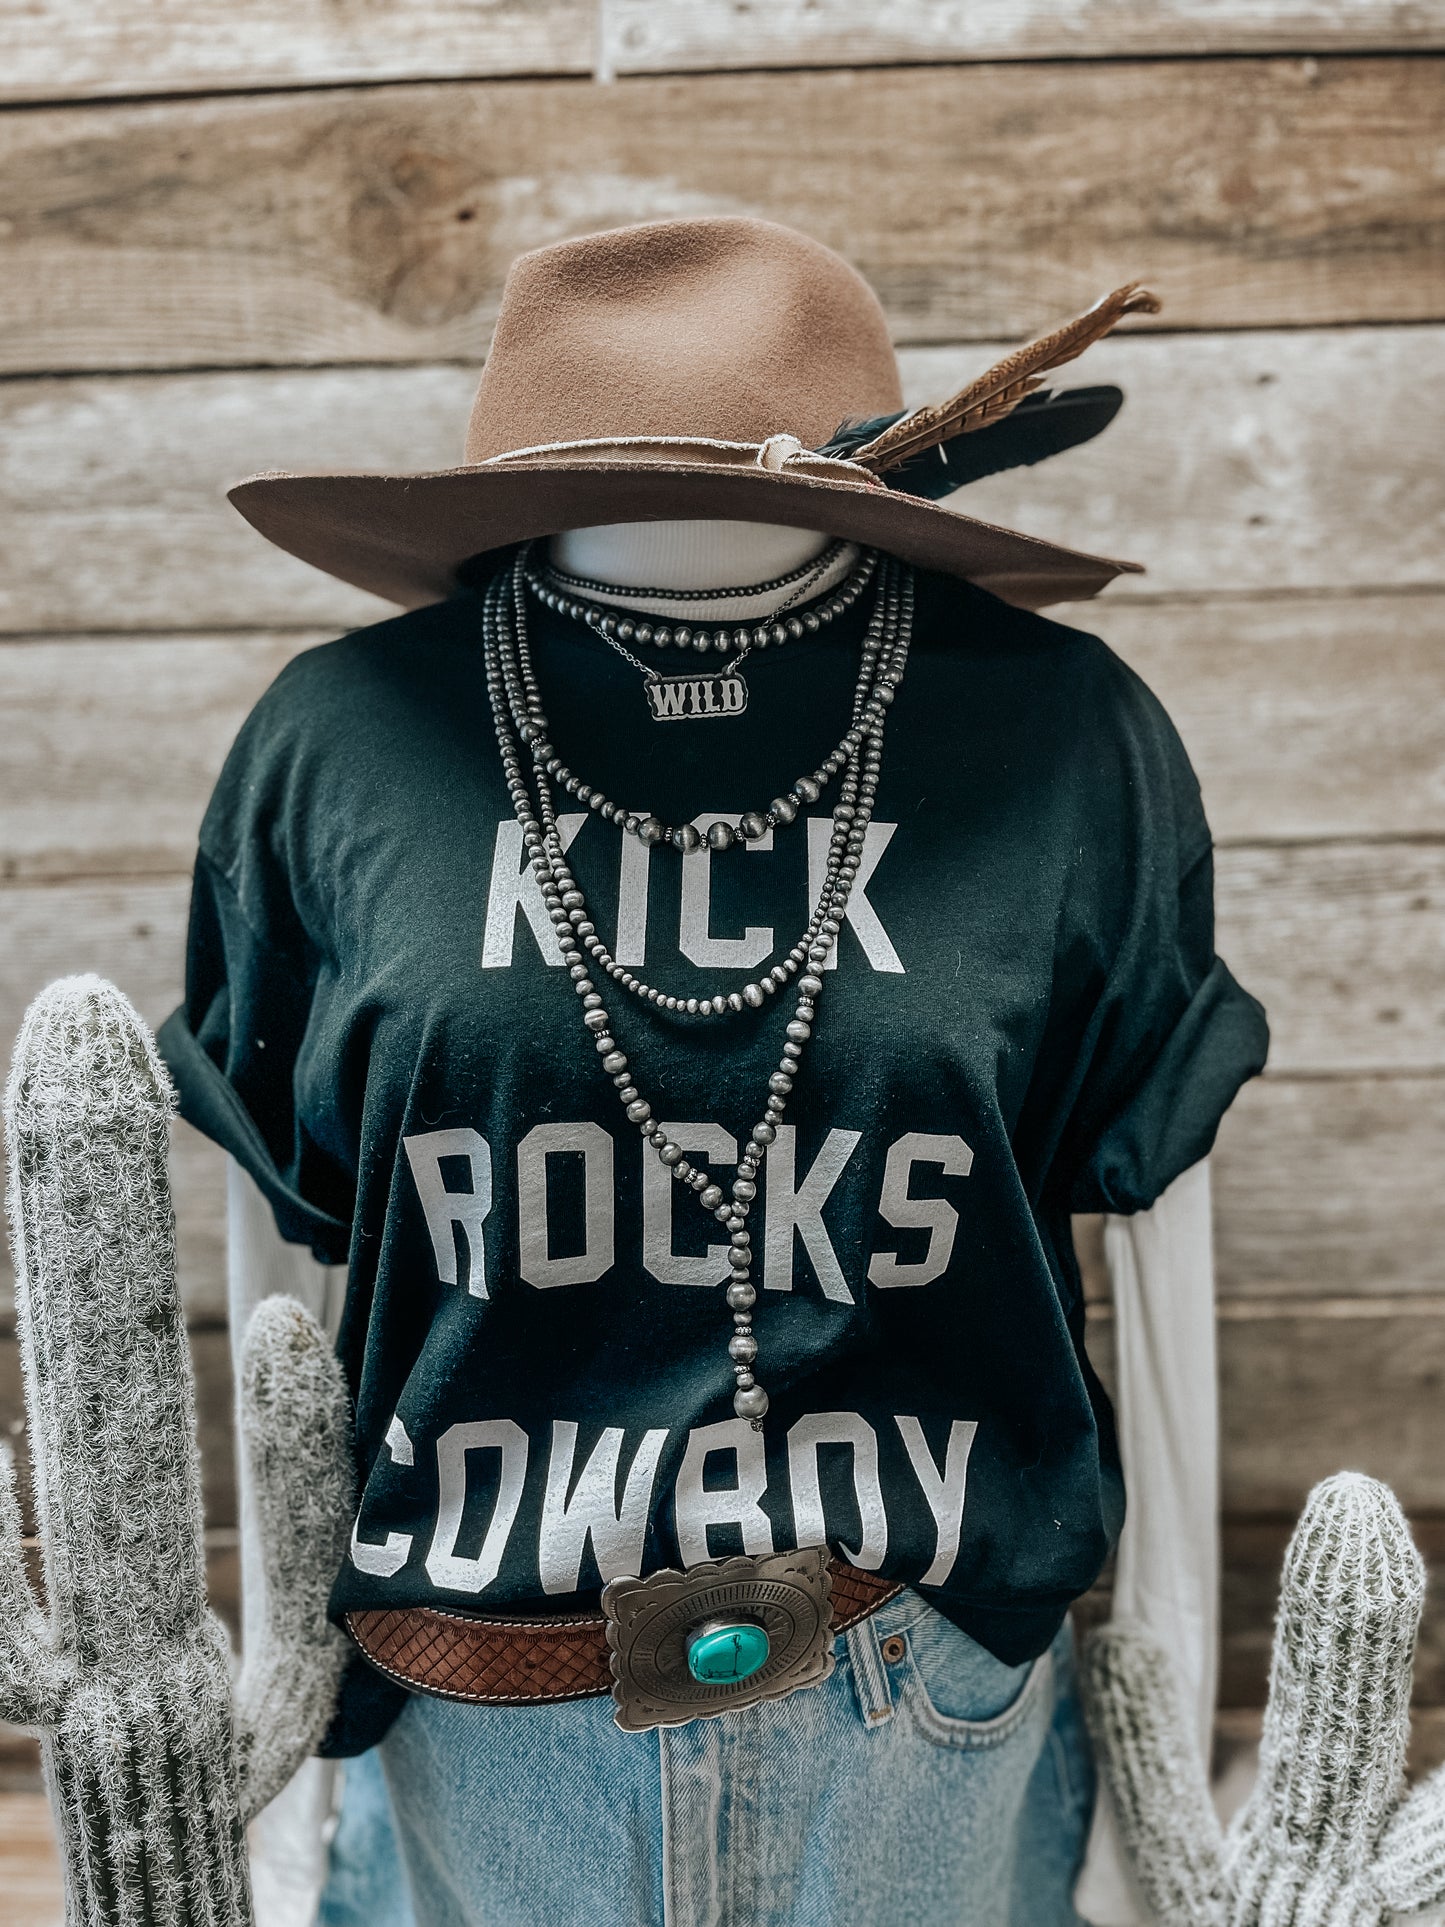 “Kick Rocks Cowboy” Tee